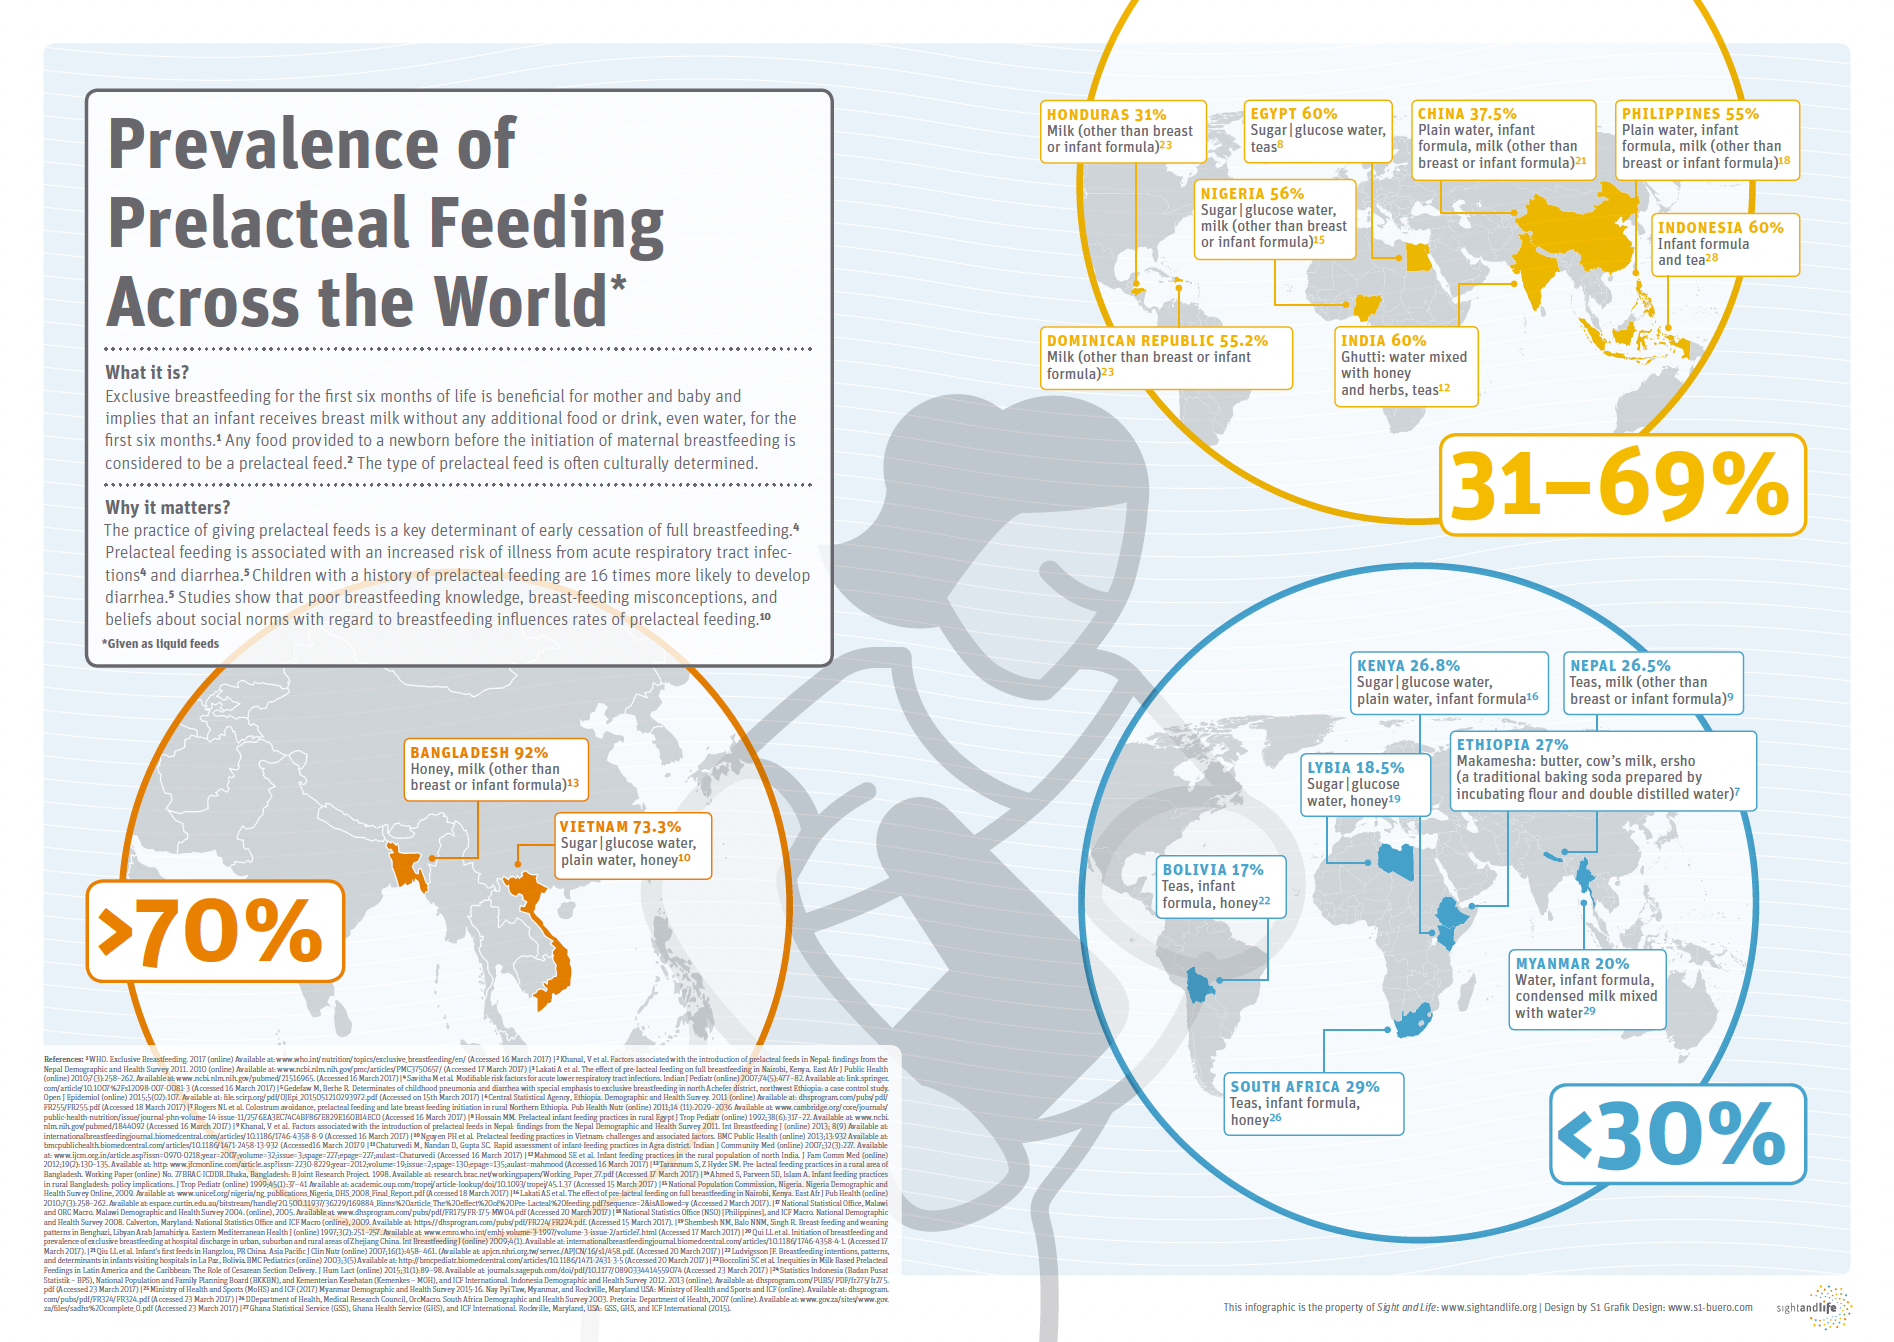 Prevalence of Prelacteal Feeding Across the World